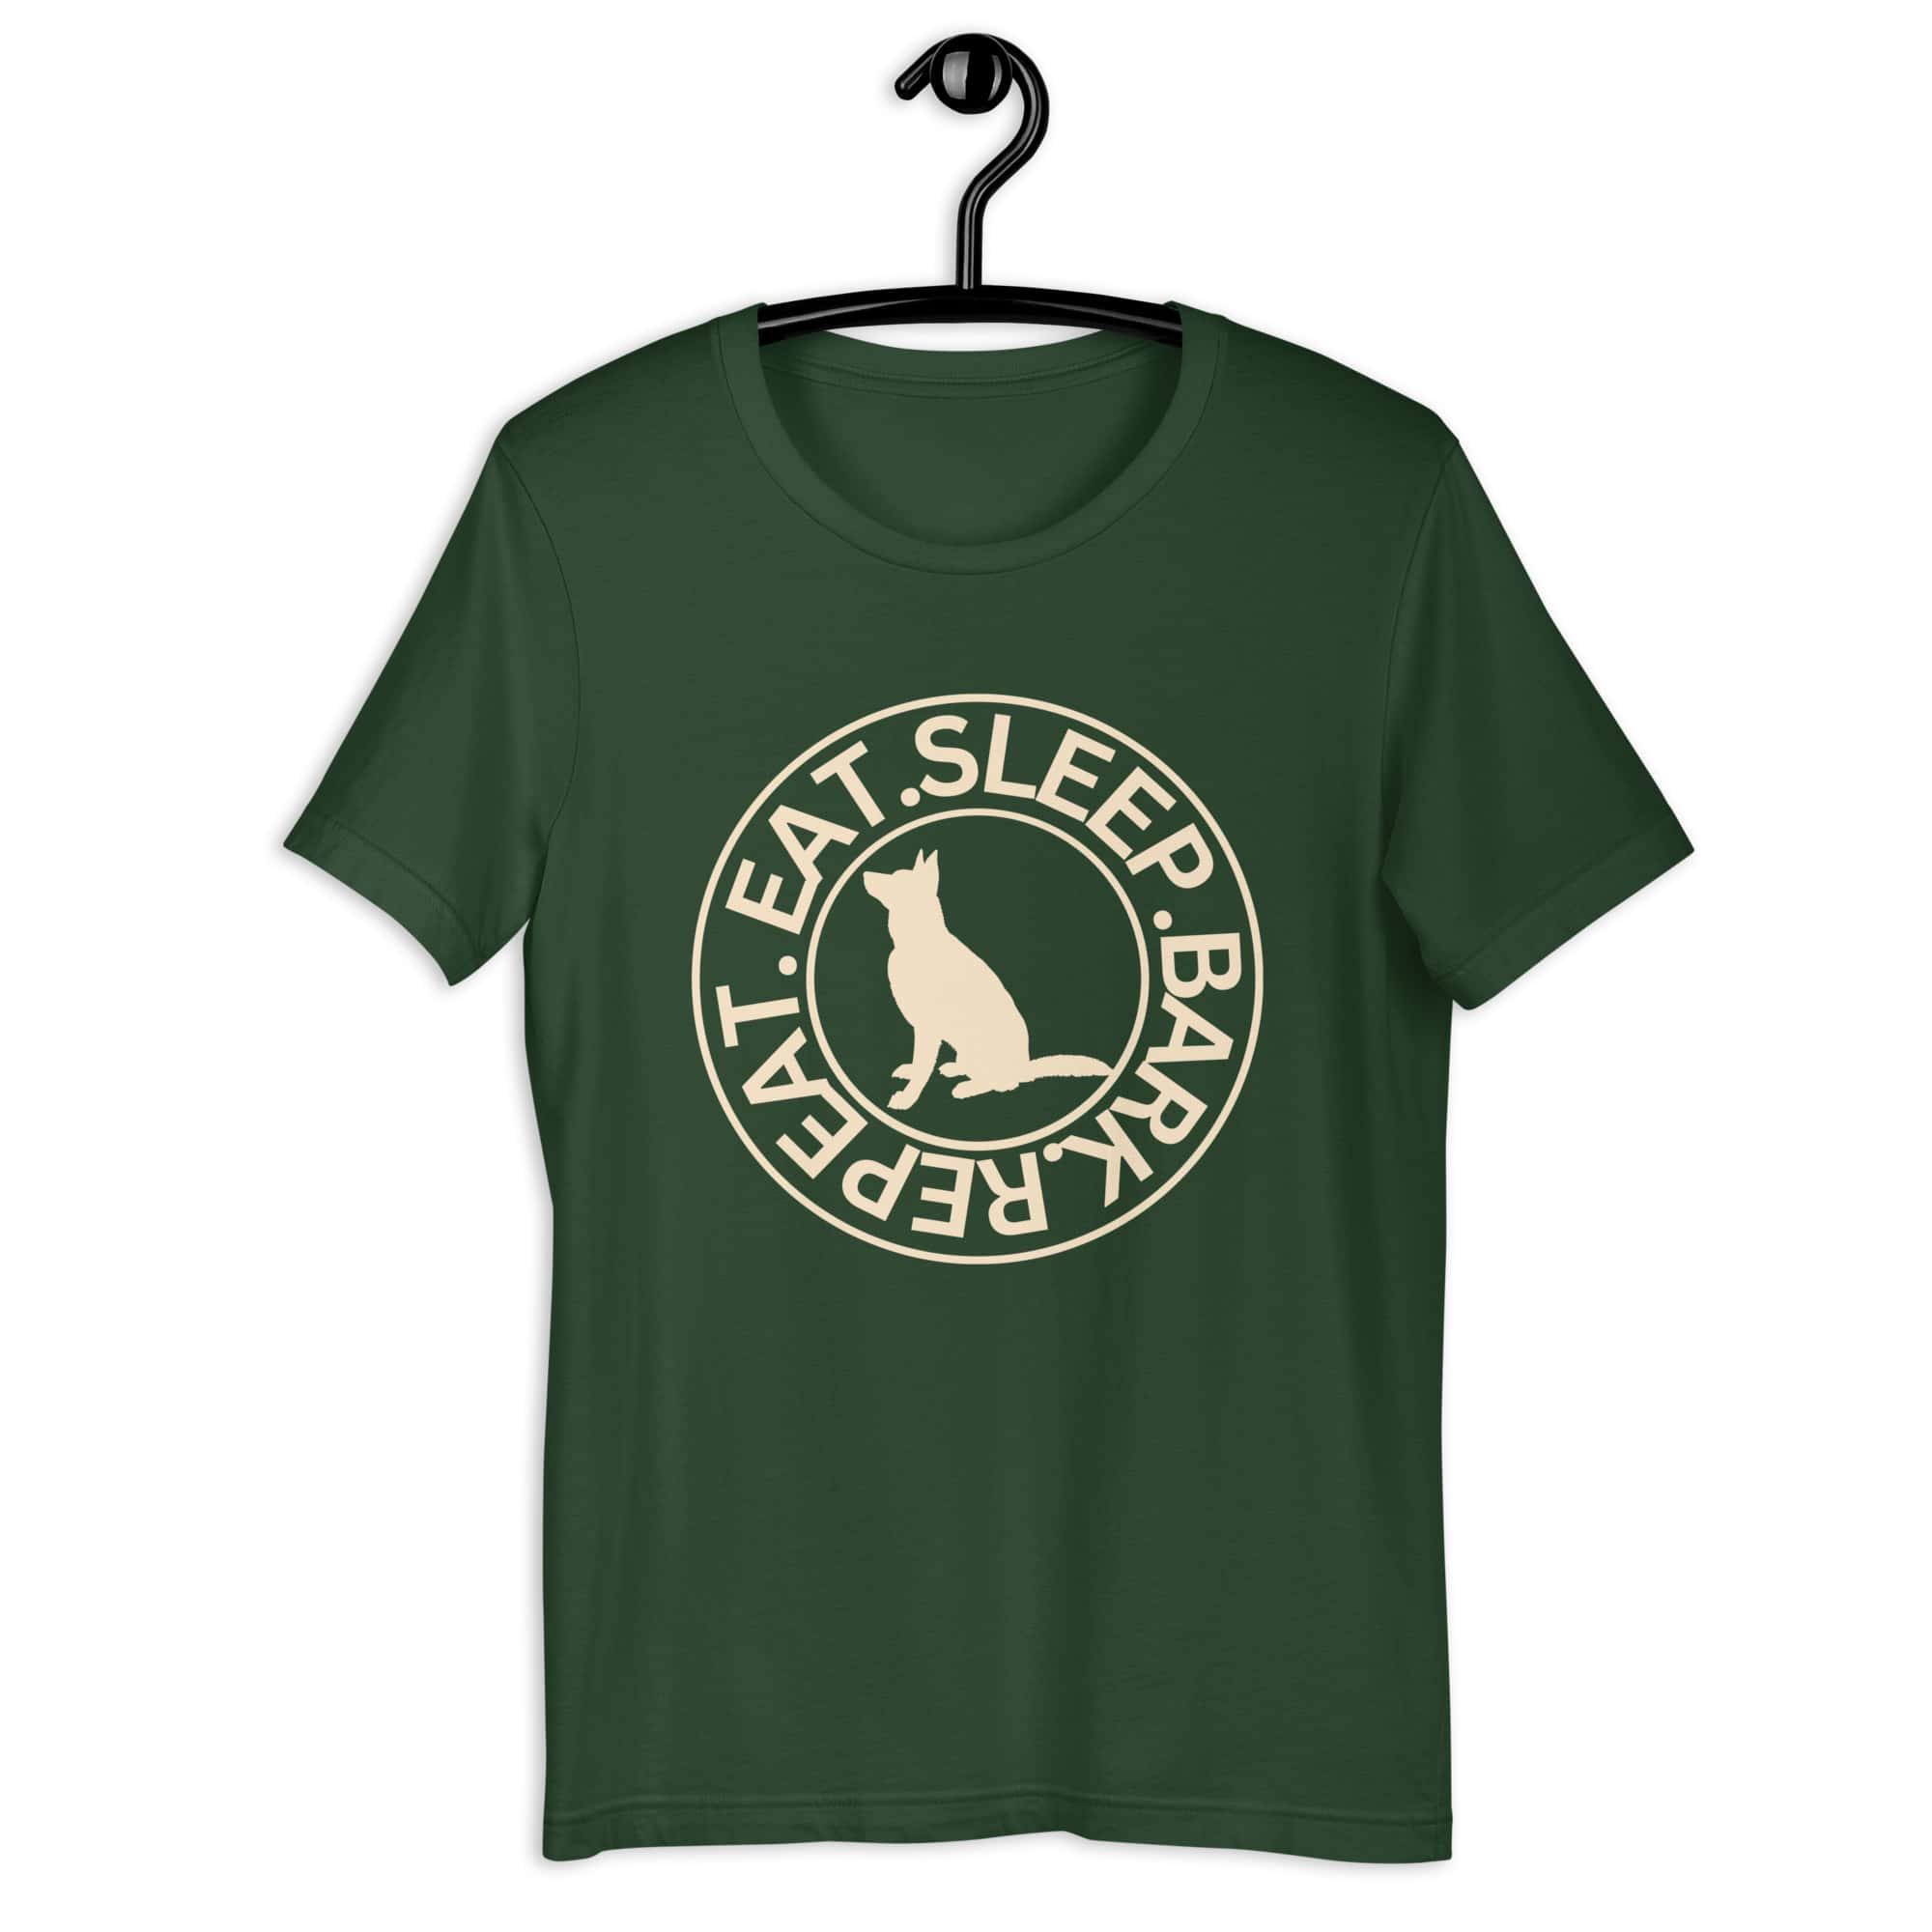 Eat Sleep Bark Repeat German Shepherd Unisex T-Shirt. Grey